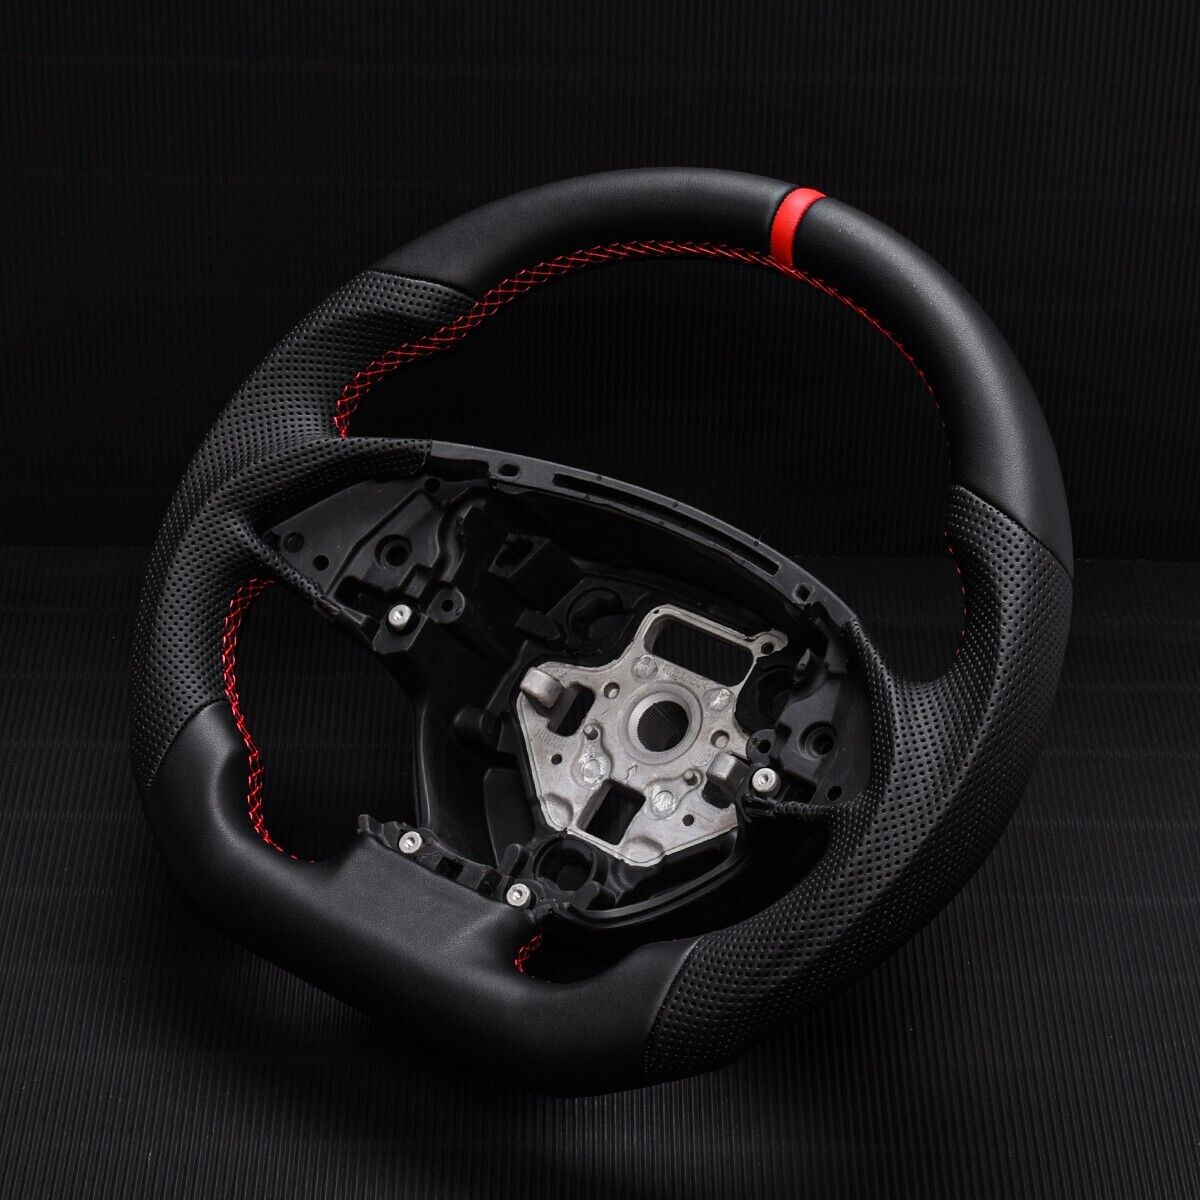 Real Leather W/heated Sport Steering Wheel For 2014-19 Chevrolet Corvette C7 ZR1